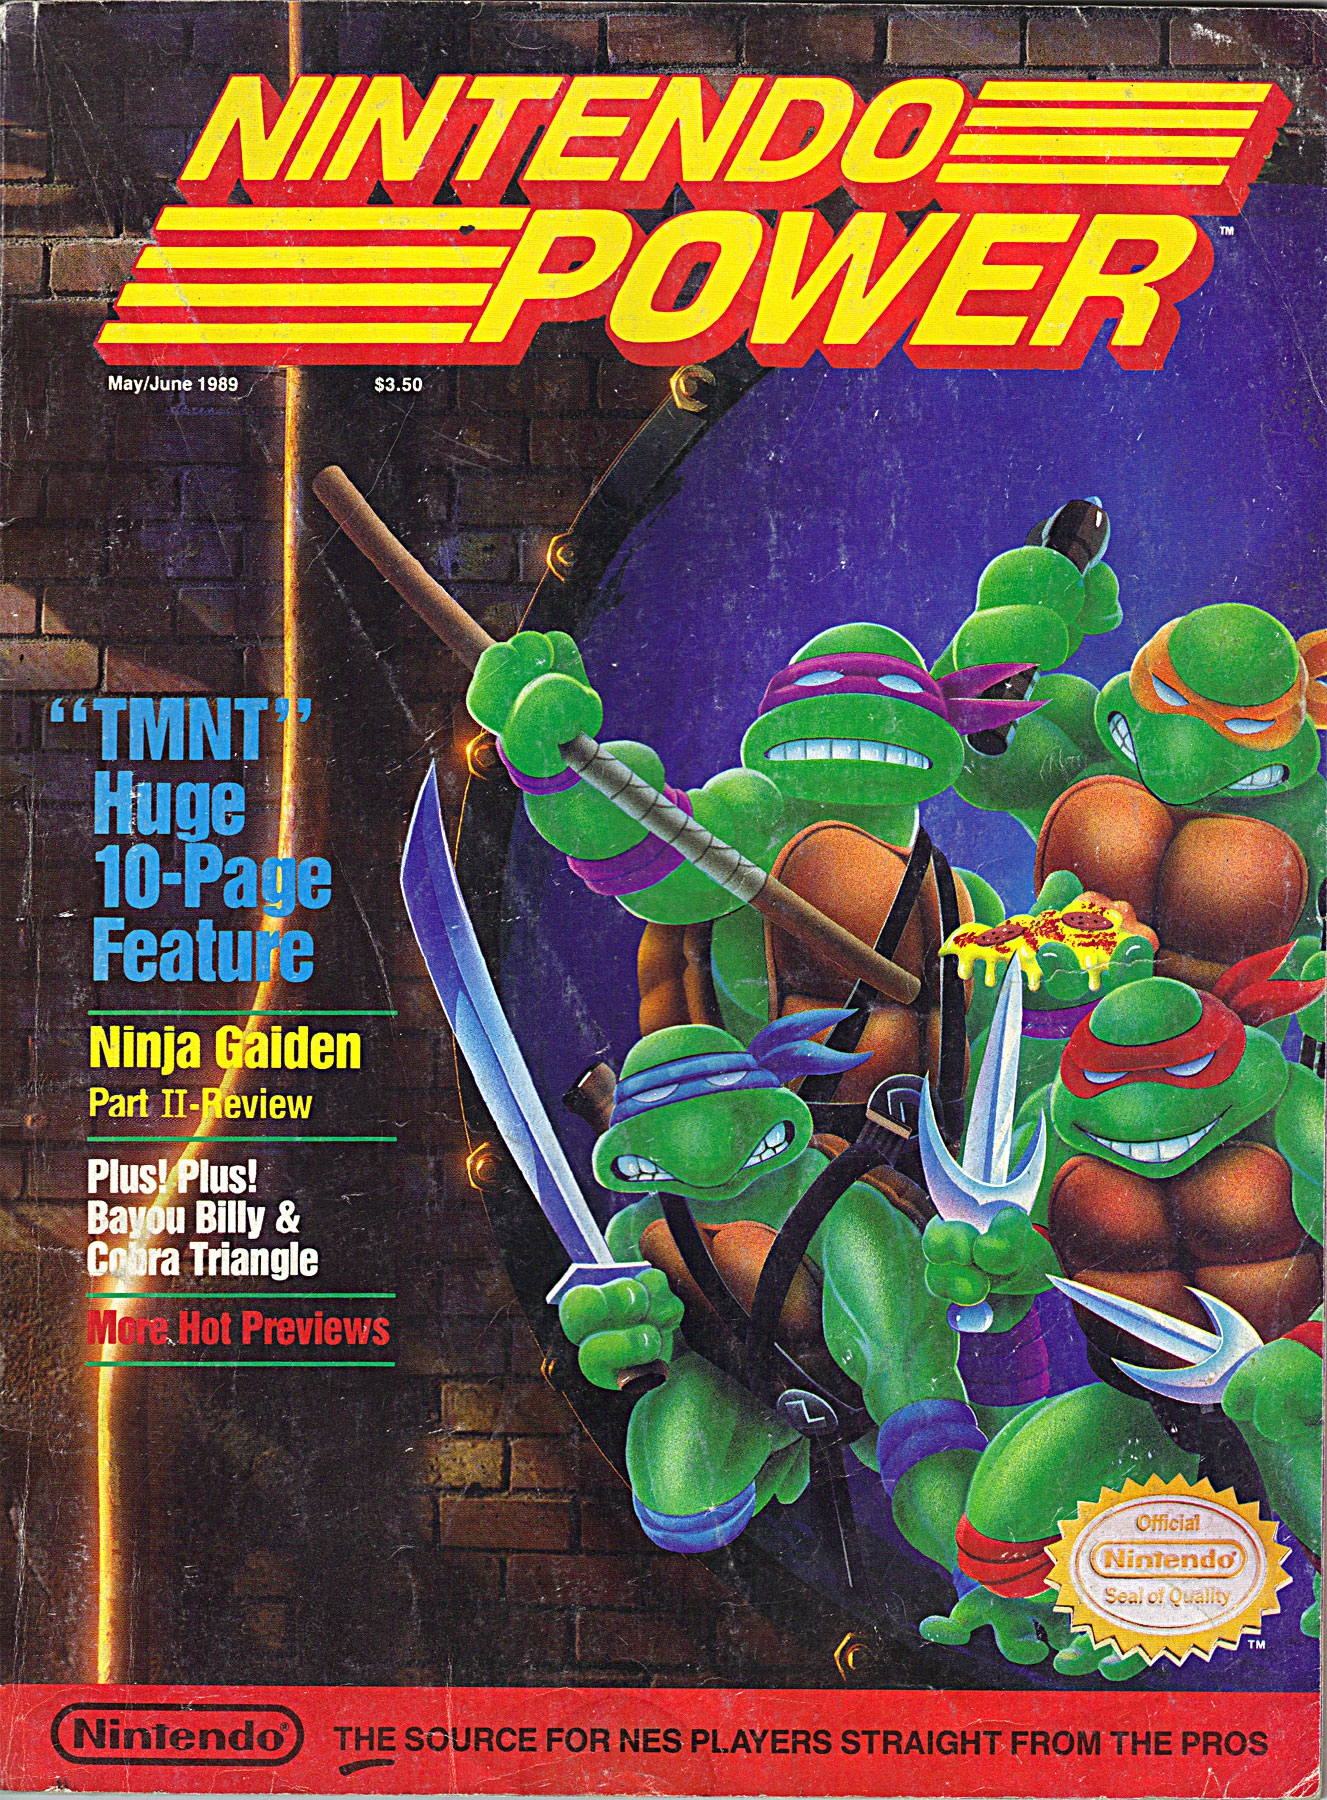 Nintendo power. Teenage Mutant Ninja Turtles NES обложка. Черепашки ниндзя 3 NES. TMNT 1989. Teenage Mutant Ninja Turtles (1989).